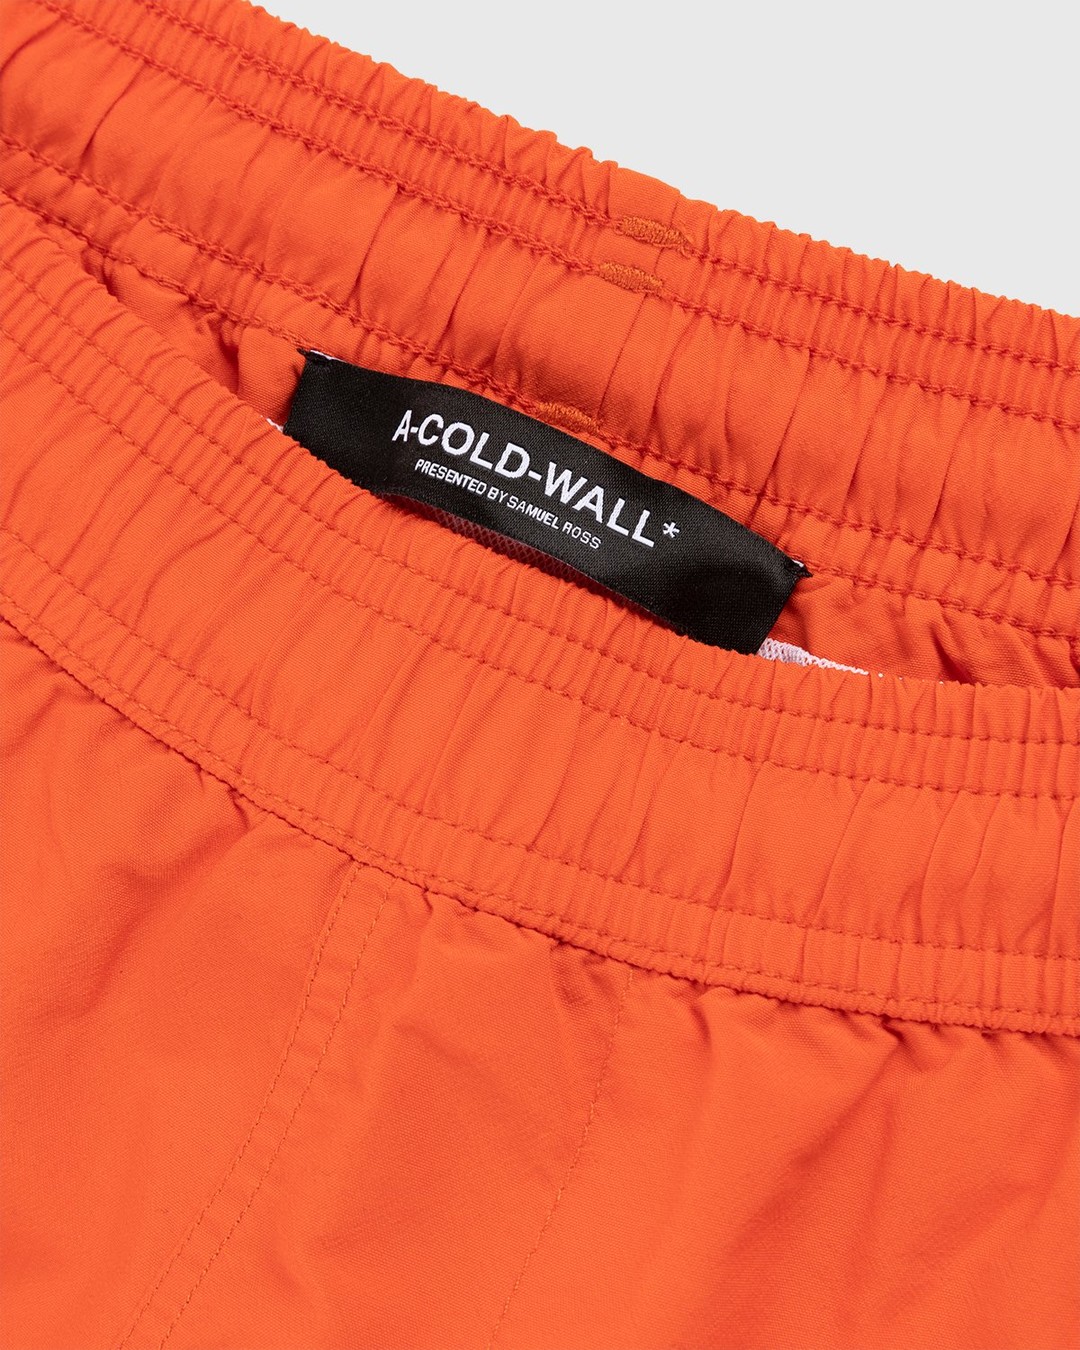 A-Cold-Wall* – Natant Nylon Short Rich Orange - Active Shorts - Orange - Image 5